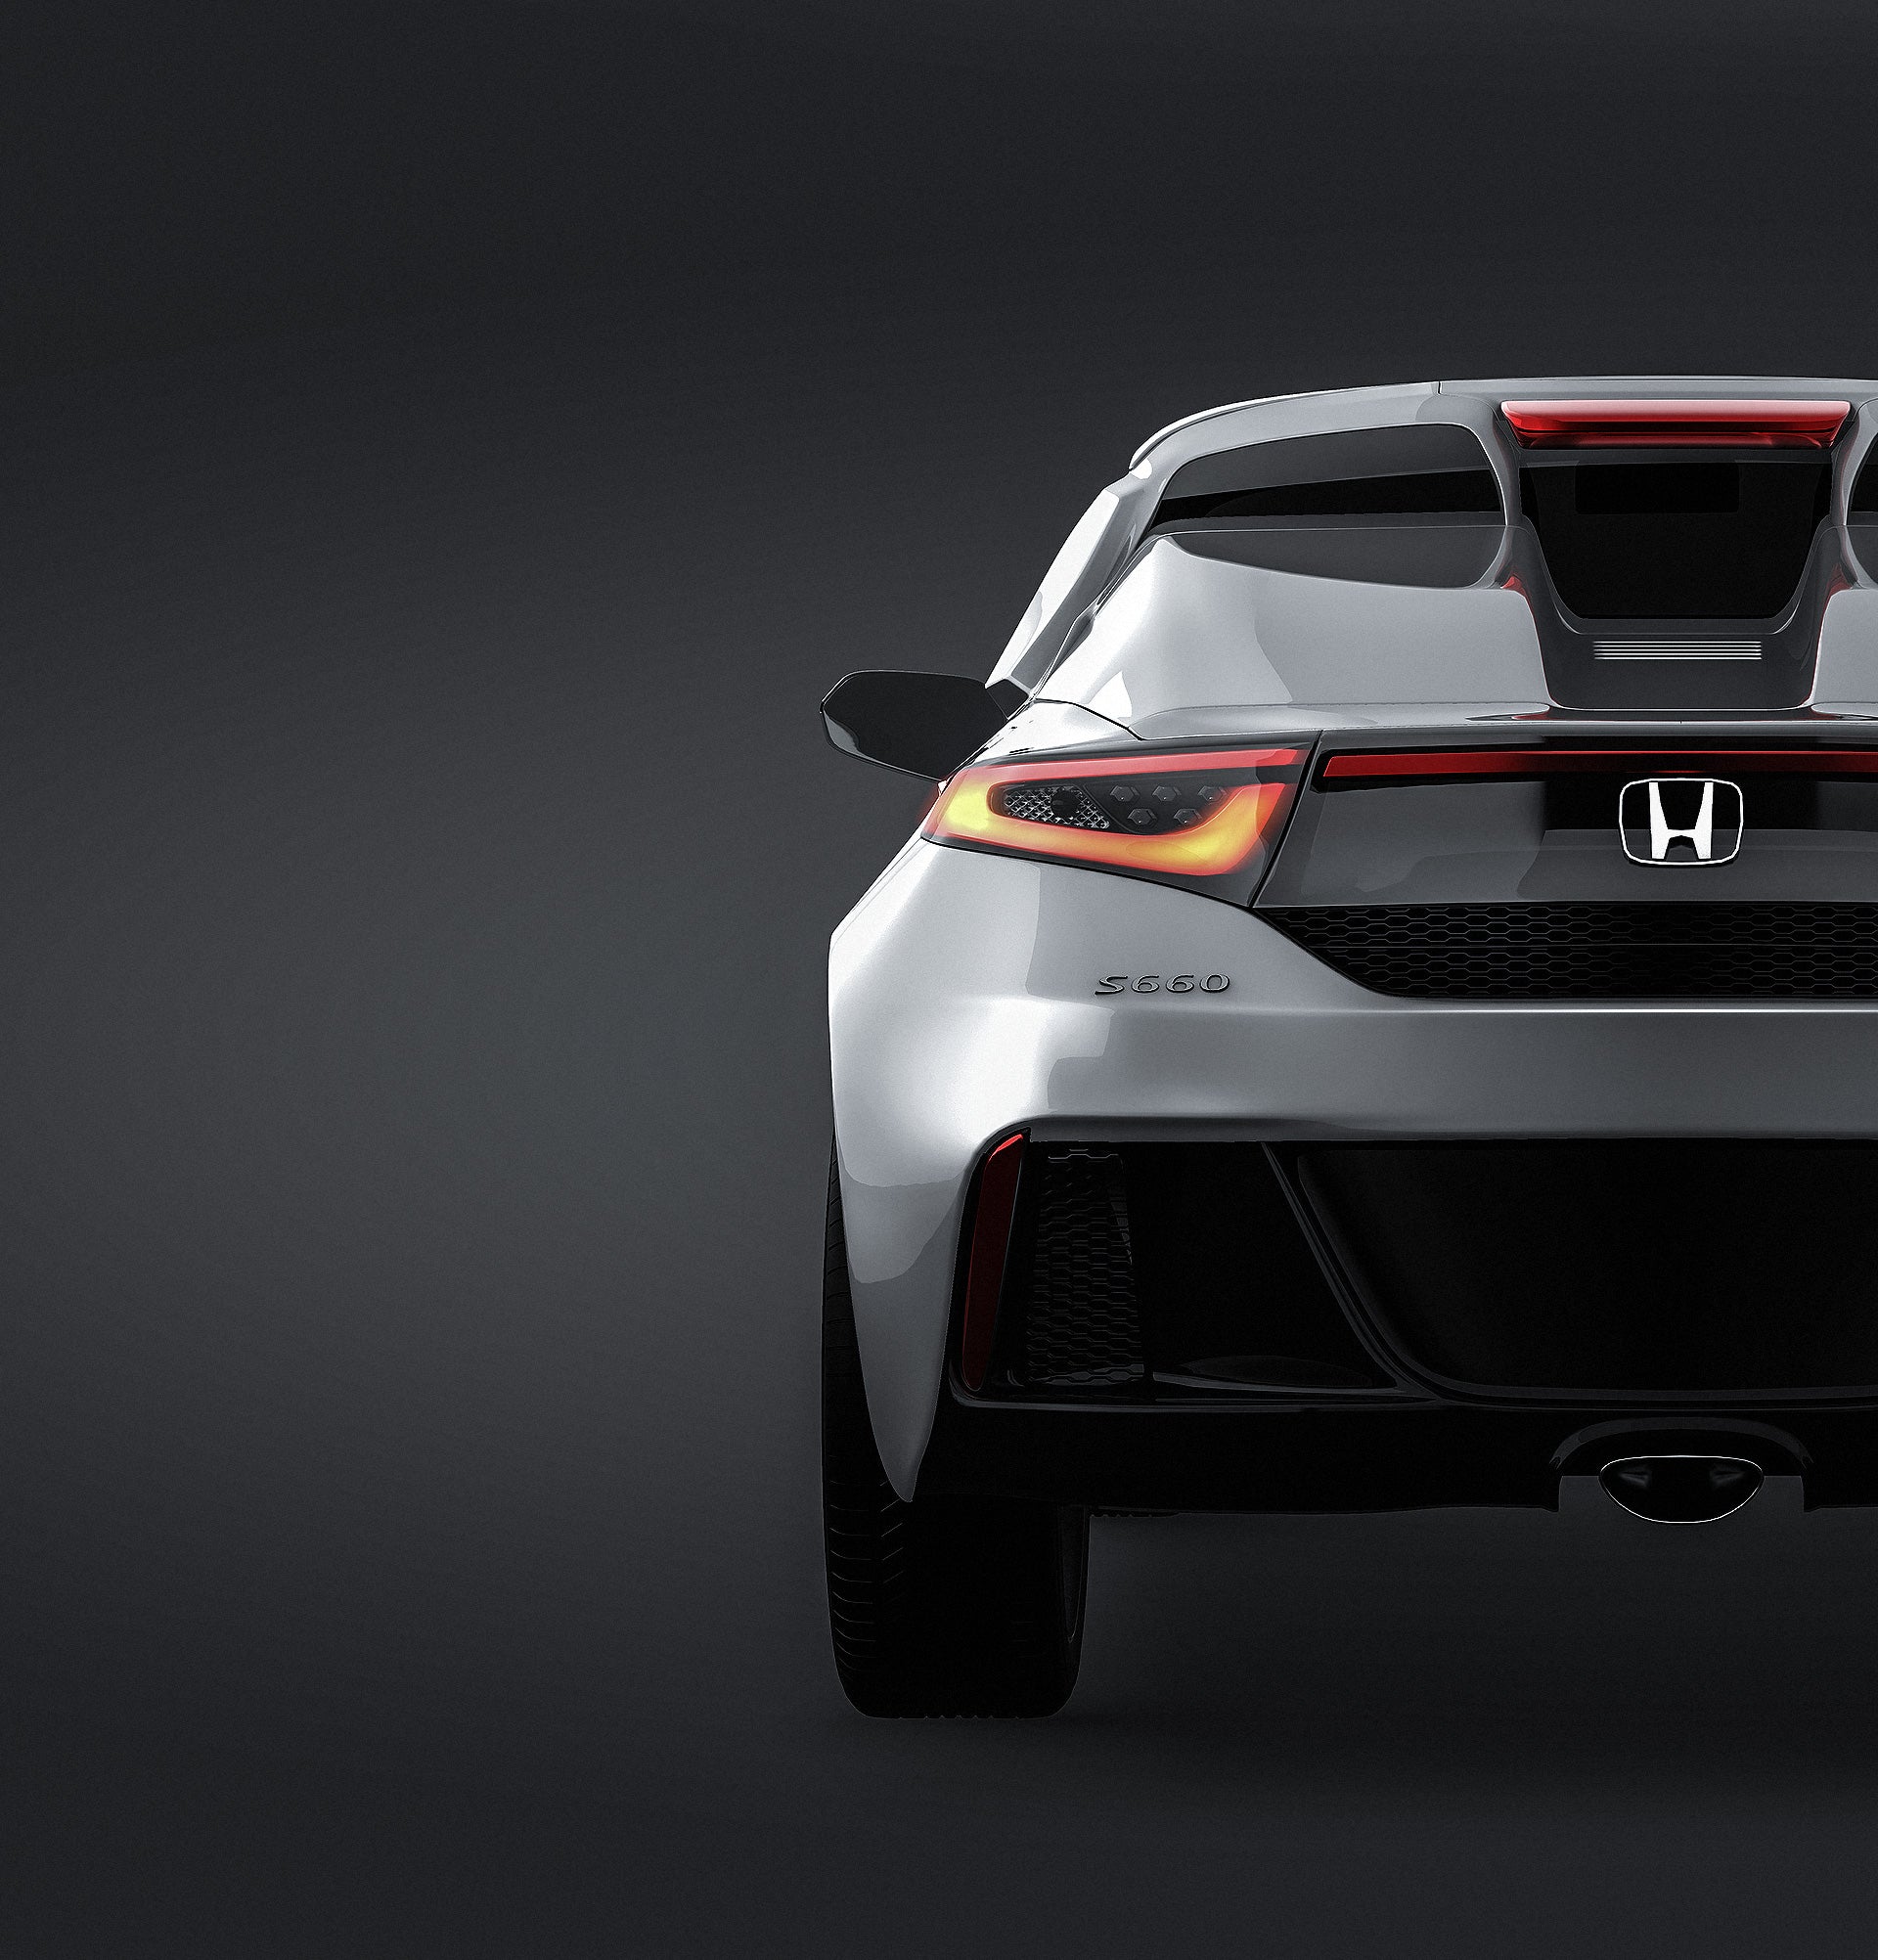 Honda S660 2015 glossy finish - all sides Car Mockup Template.psd